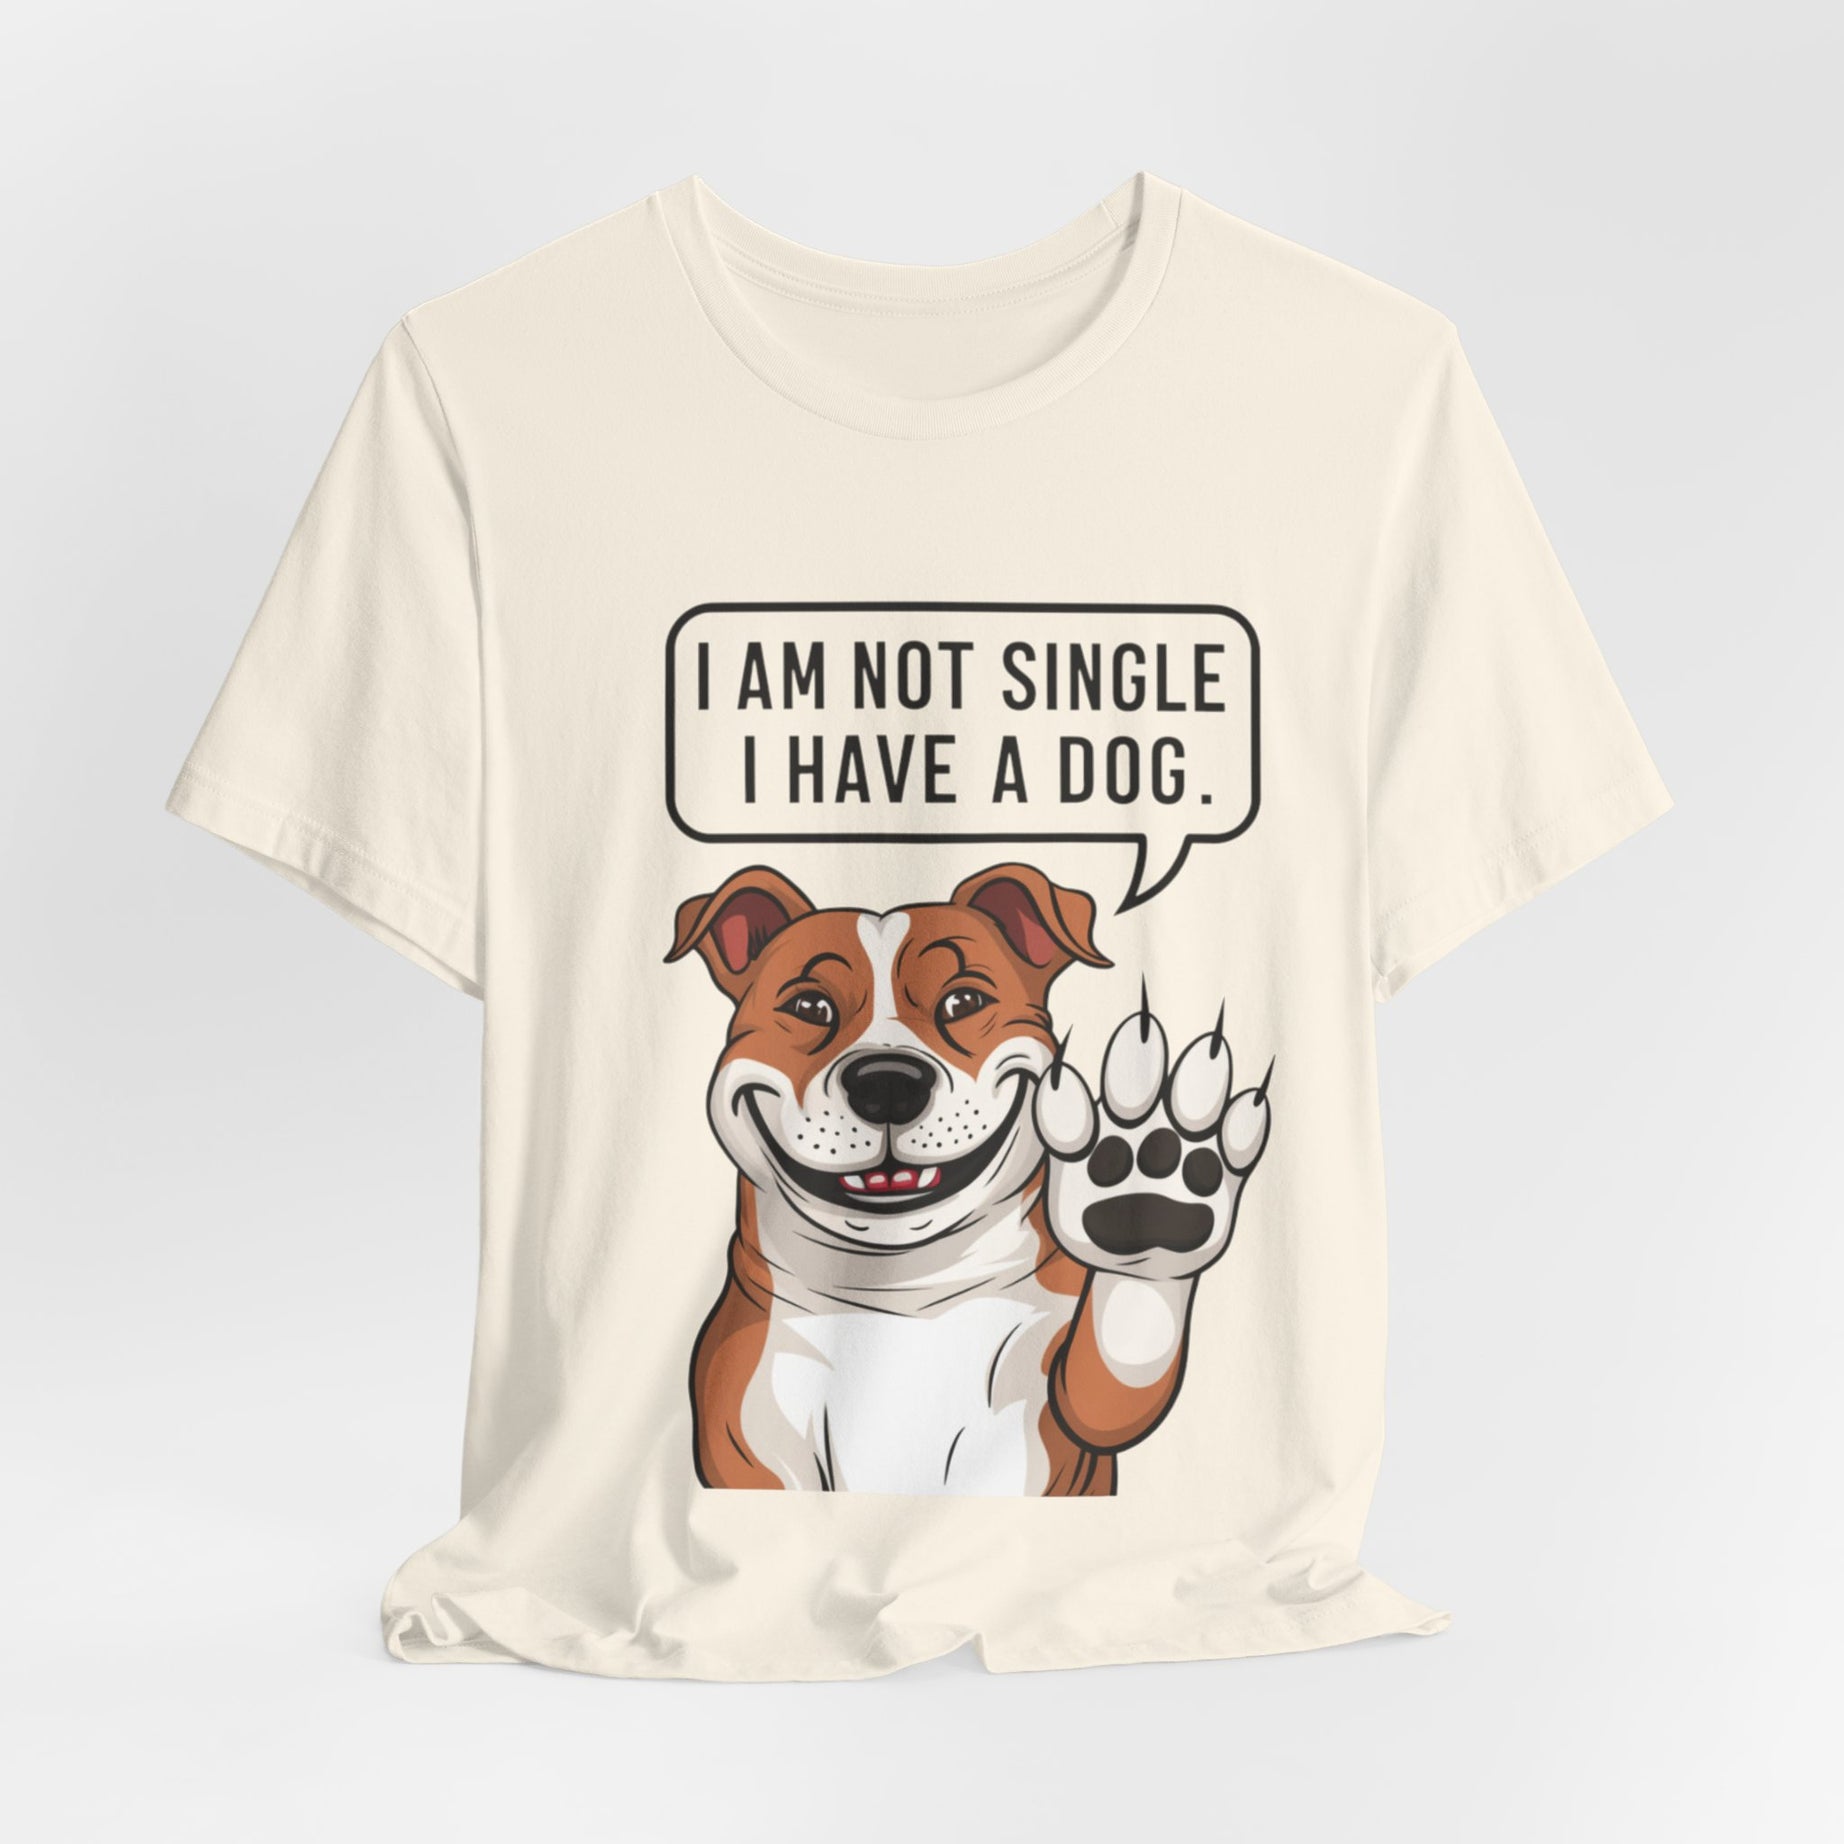 “I Am Not Single, I Have a Dog” T-Shirt